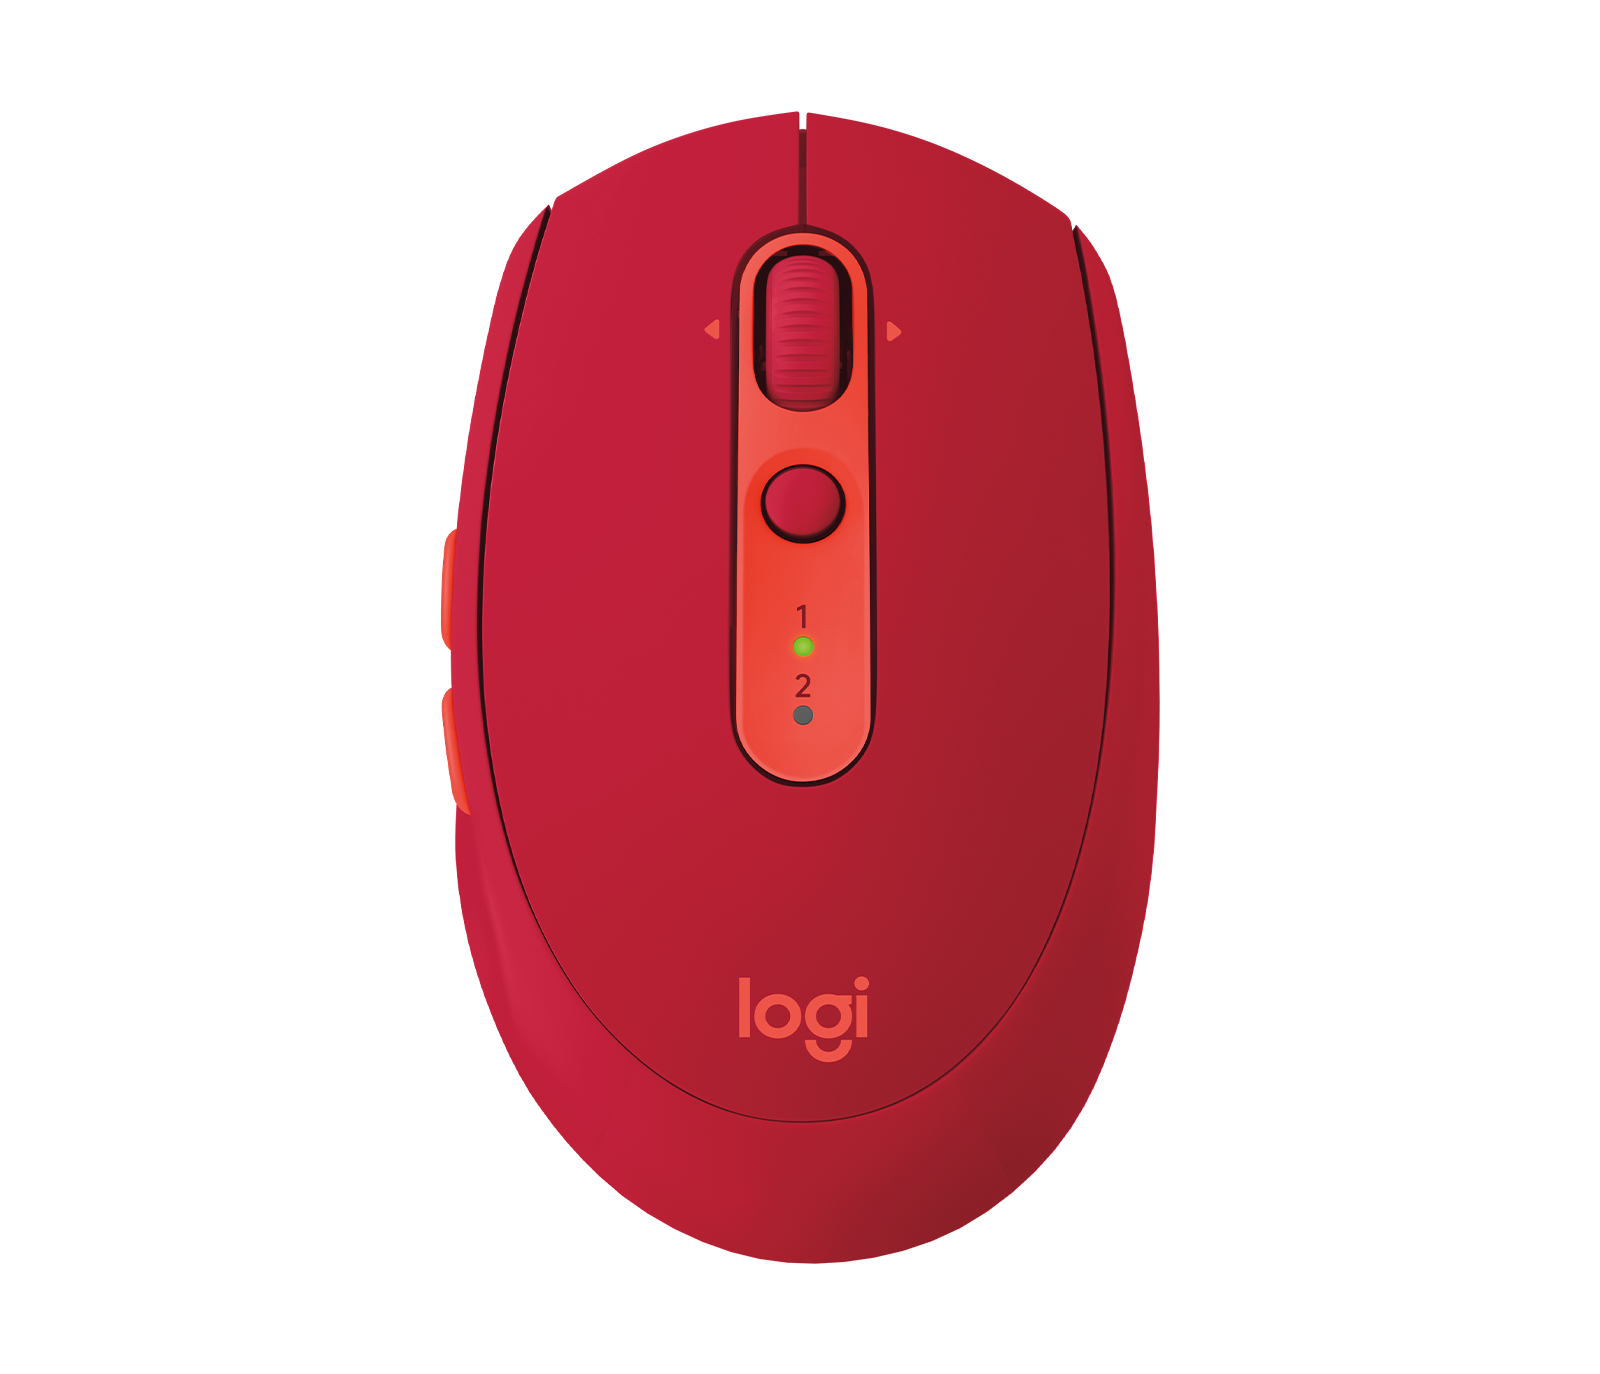 Logitech M590 Multi Device Silent Wireless Mouse